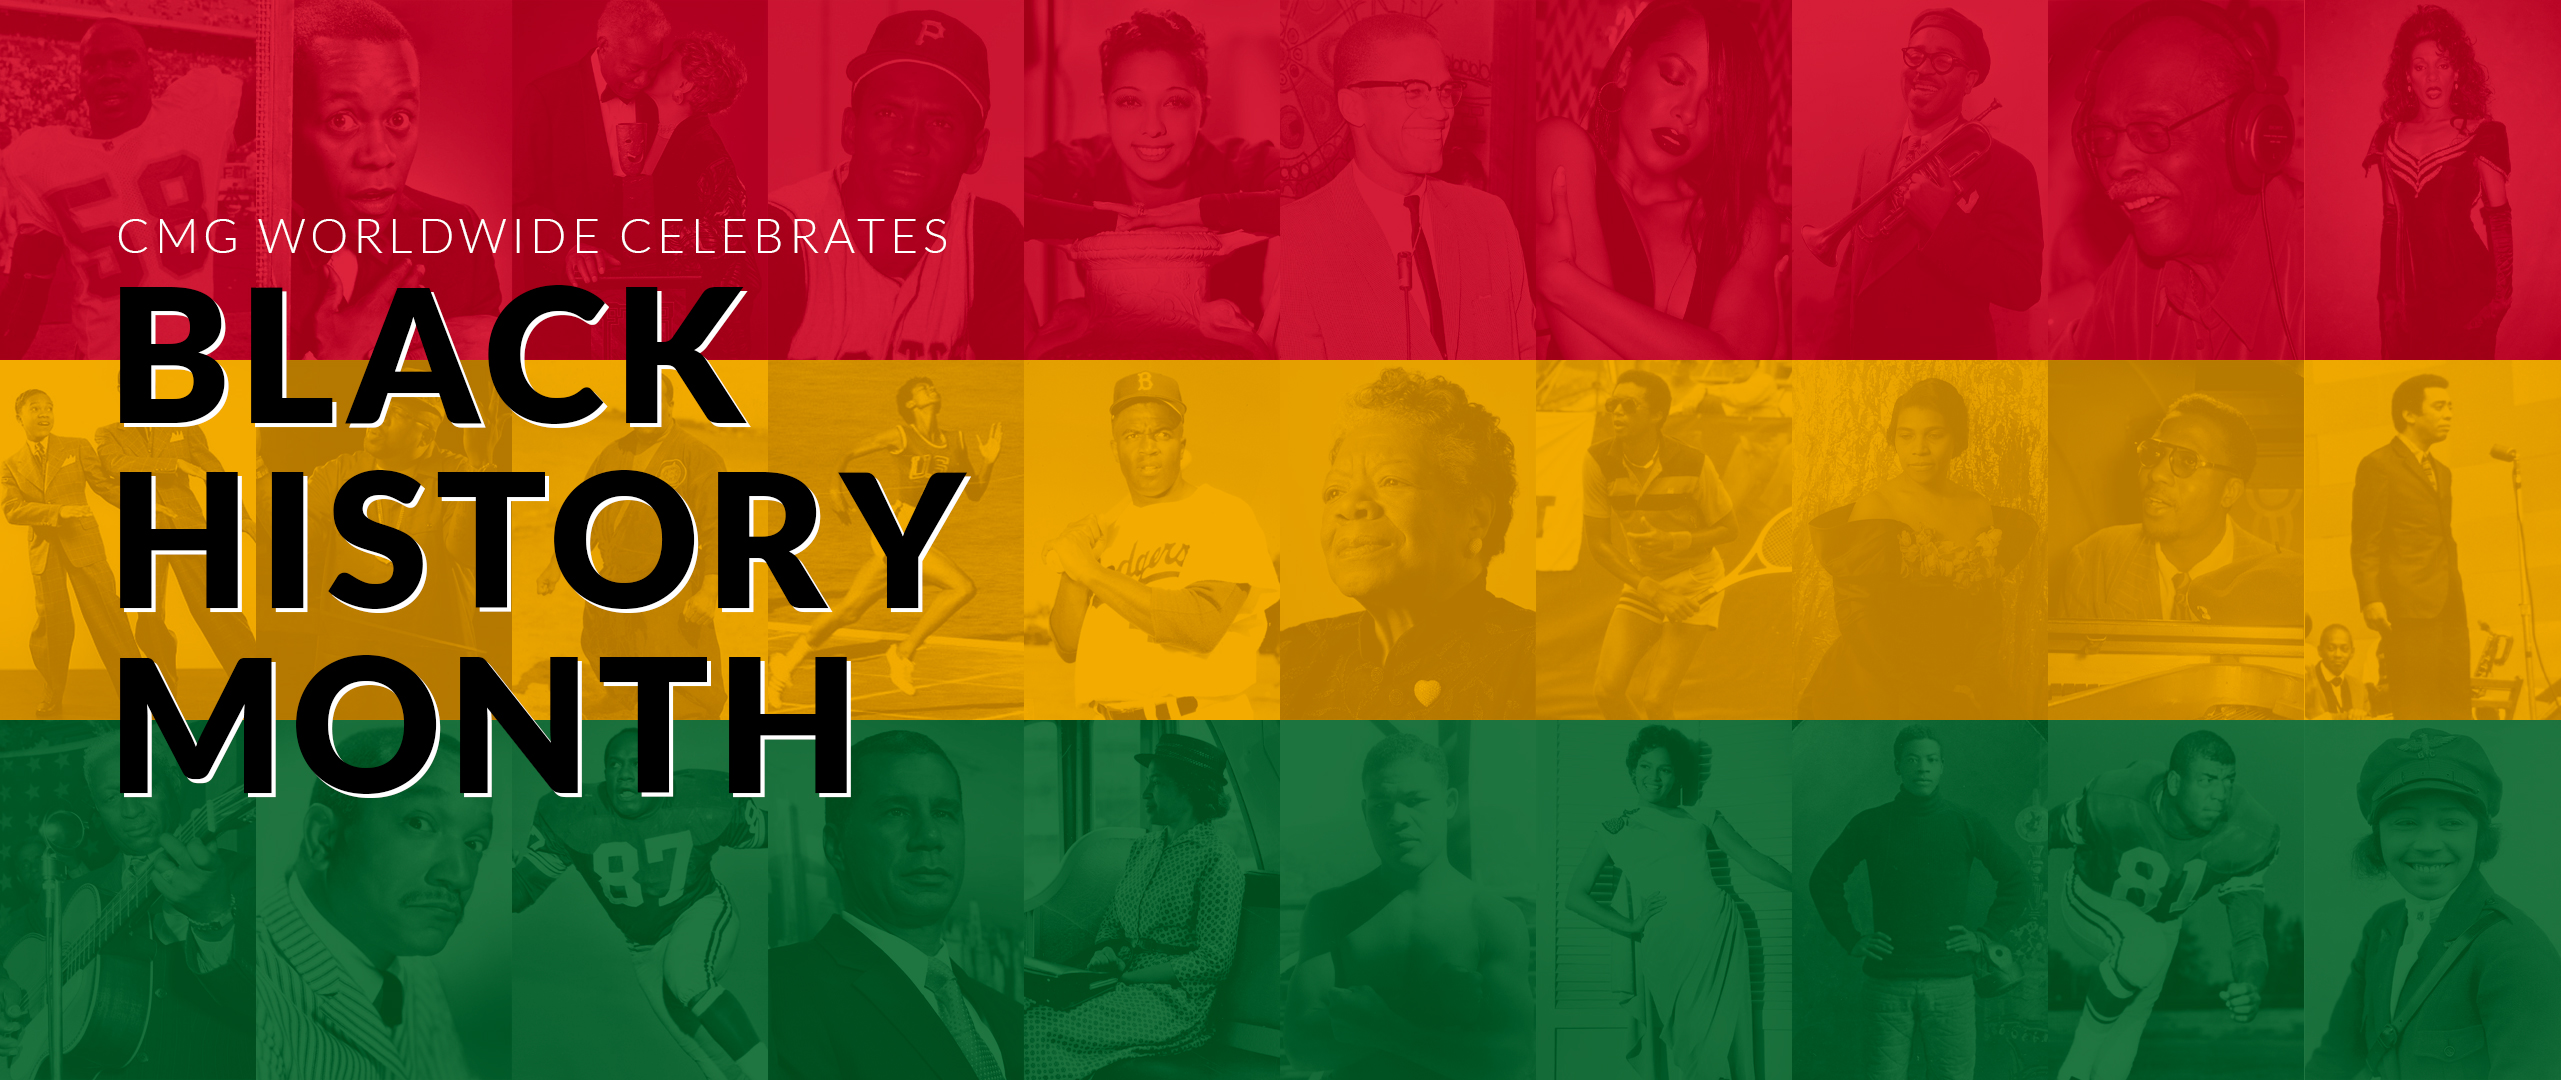 CMG Worldwide celebrates Black History Month